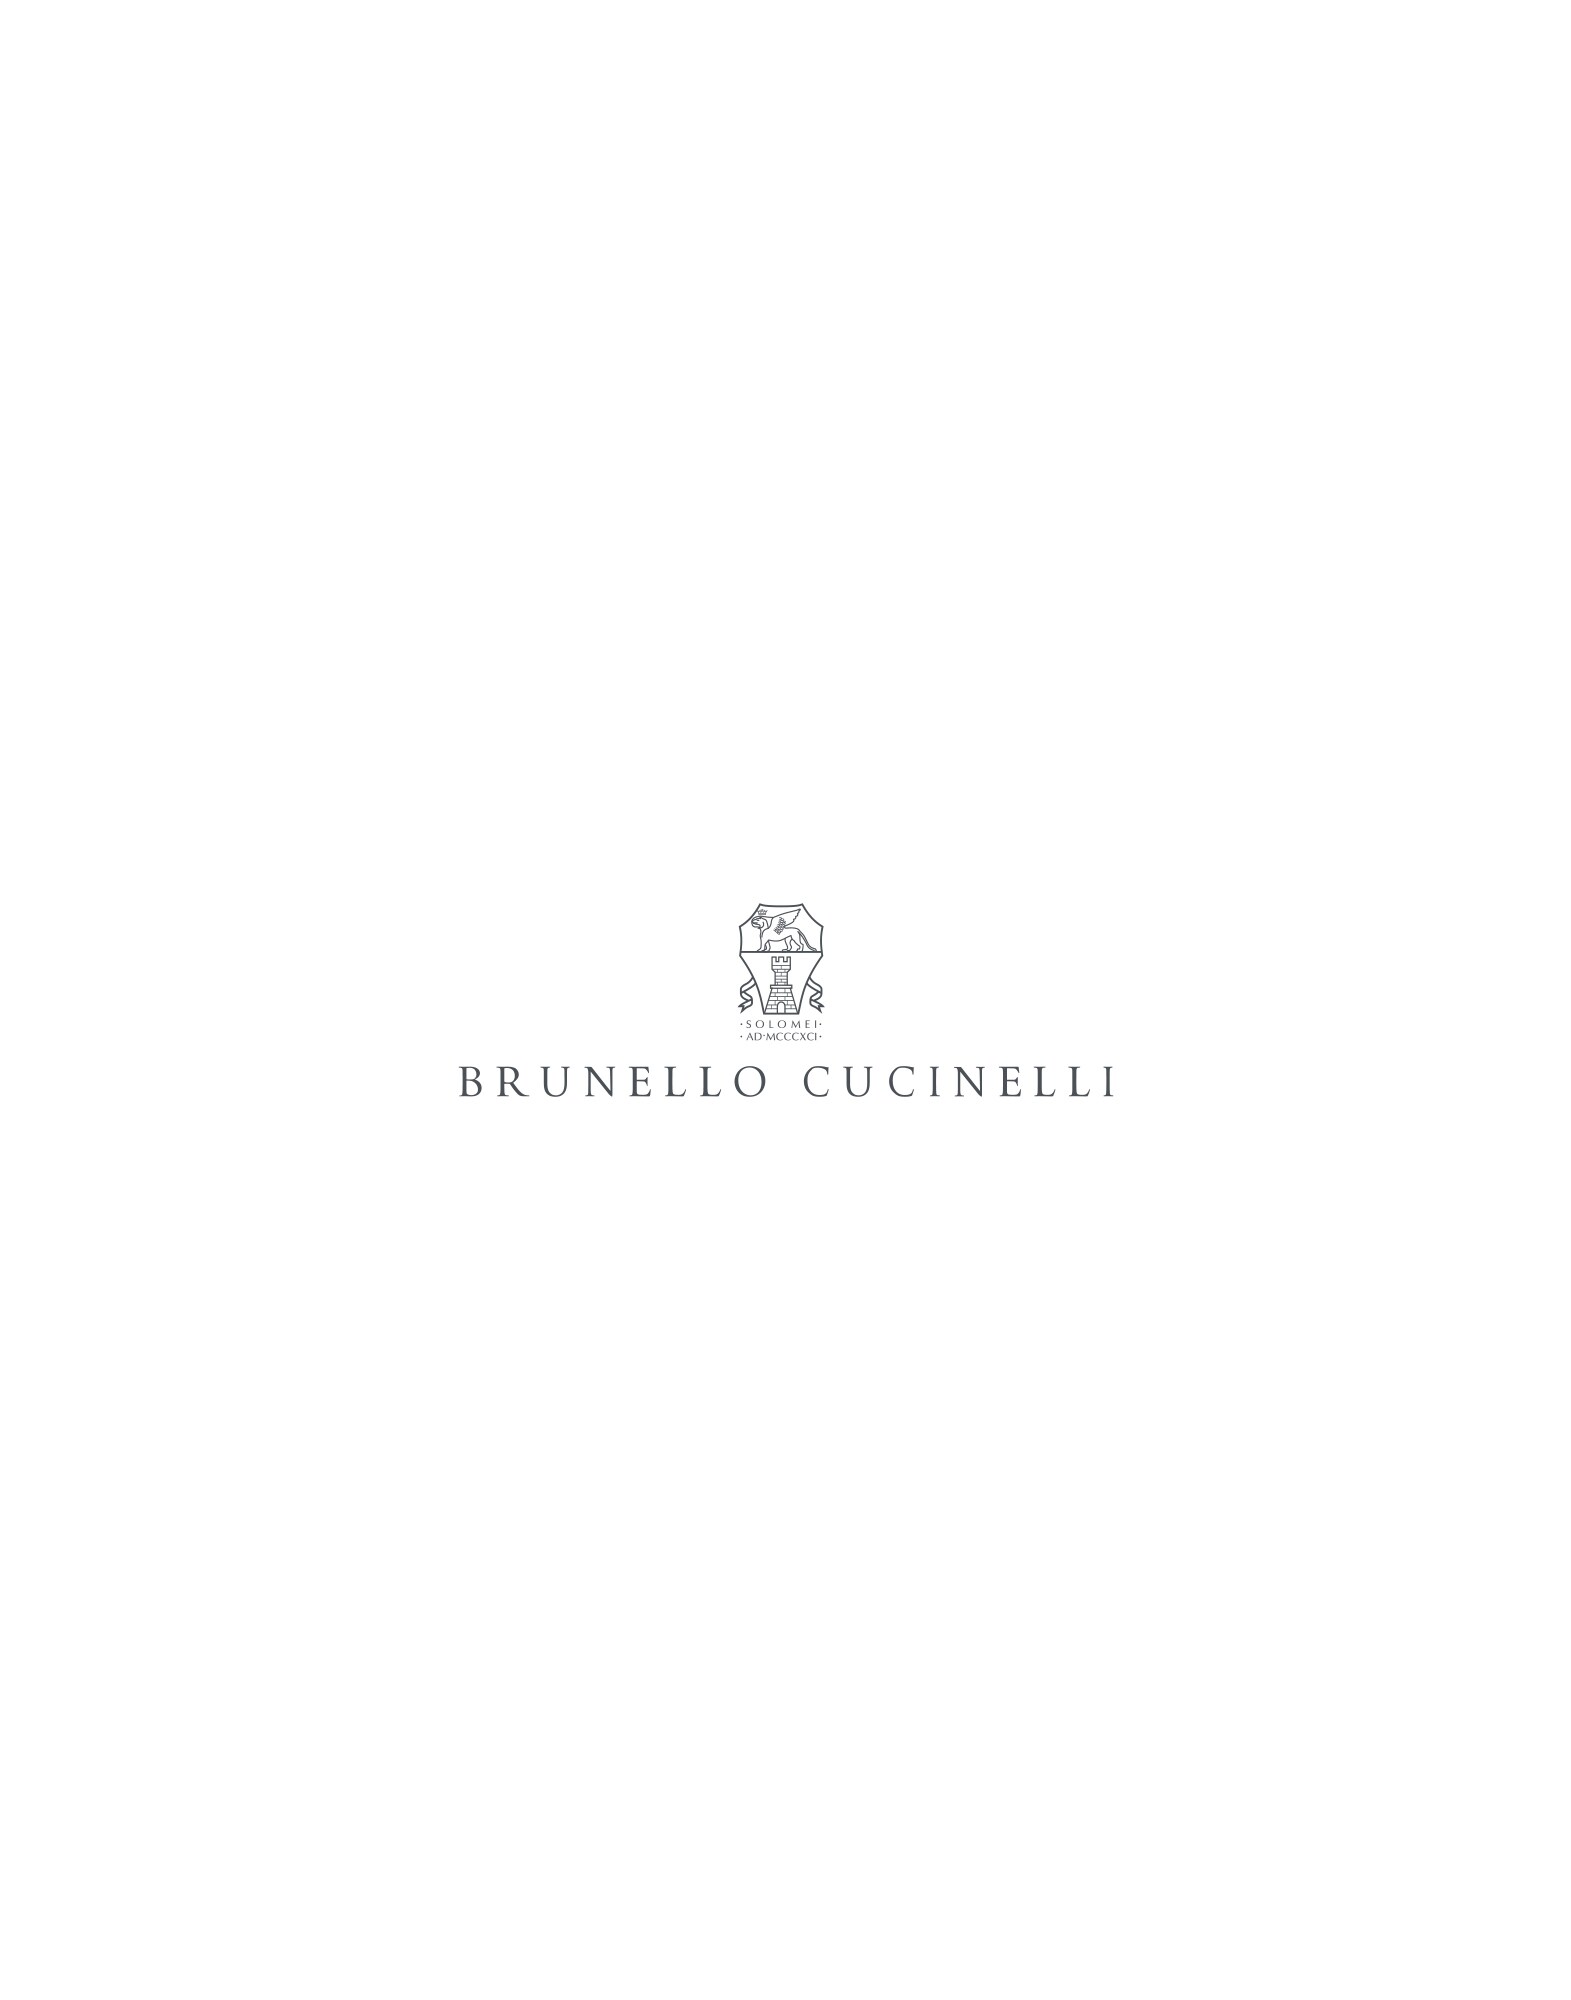 Brunello Cucinelli: Official boutique for women, men and kids